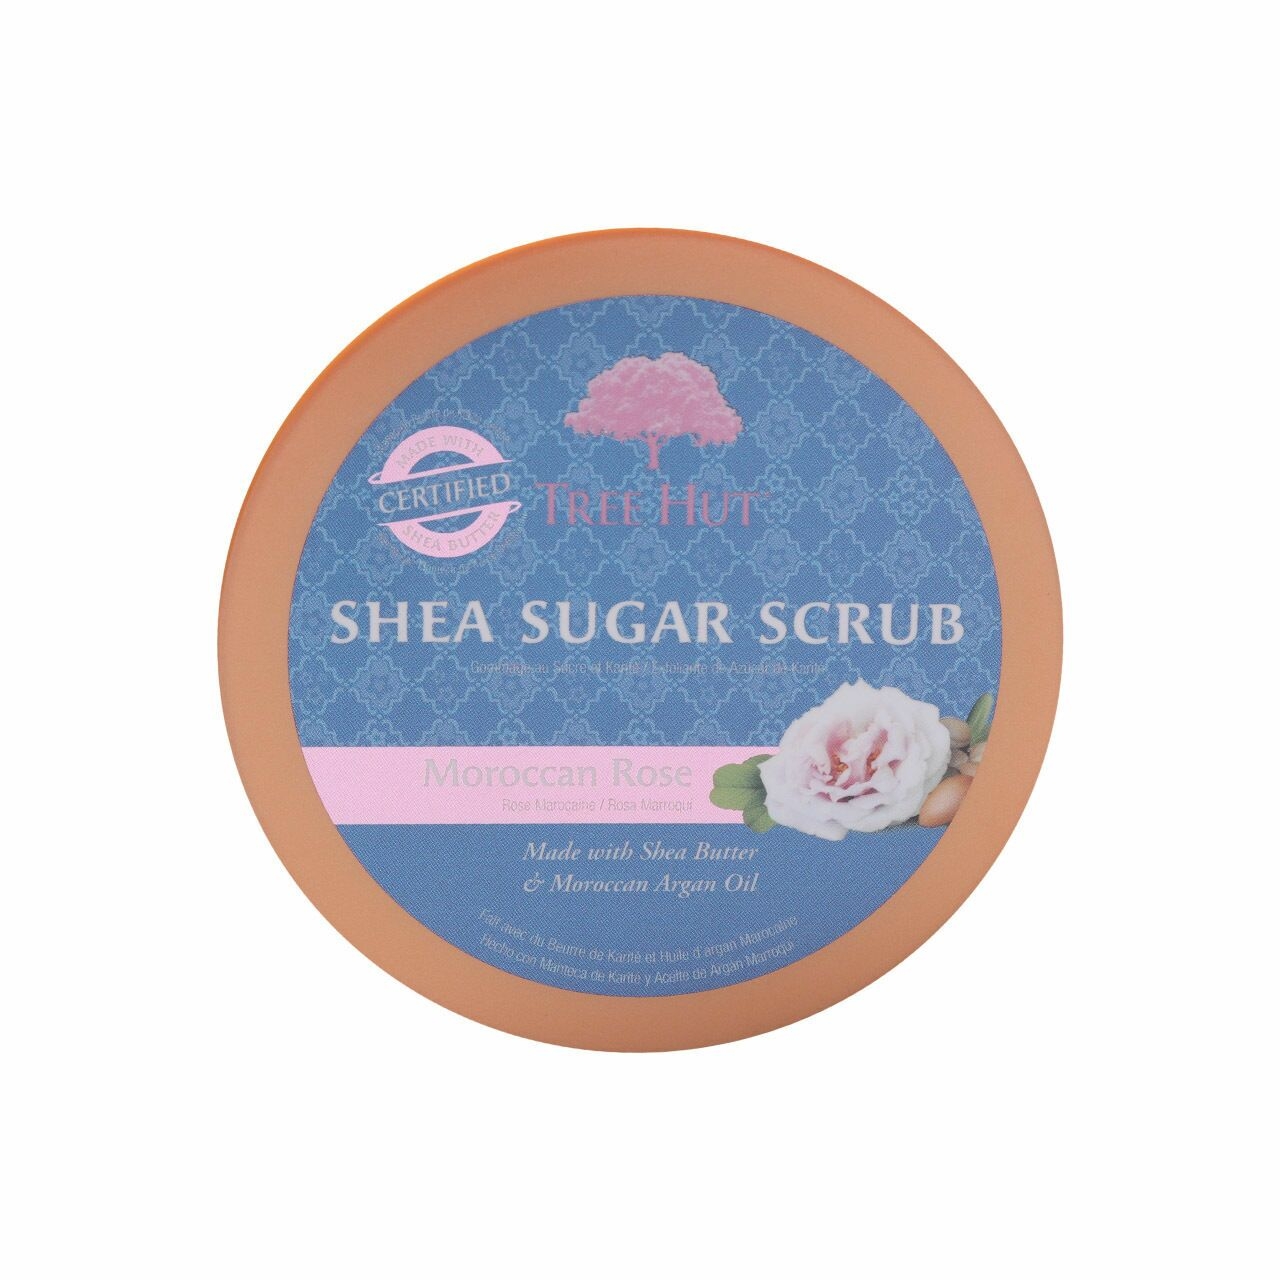 Tree Hut Shea Sugar Scrub Skin Care